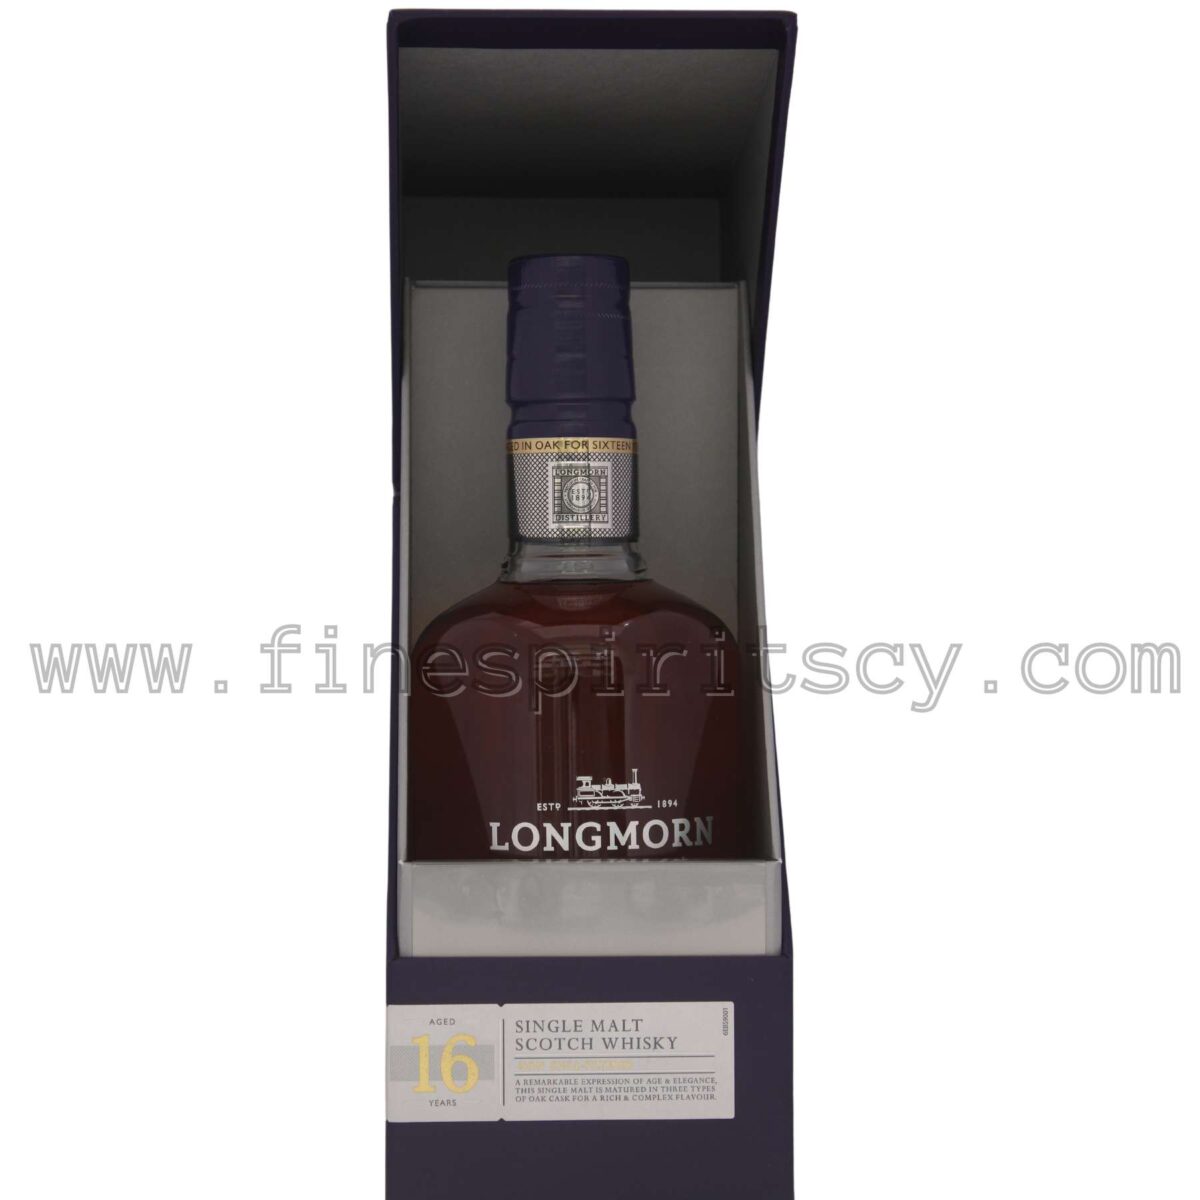 Longmorn 16 YO Open Box Bottle Front Face Shop Price Order Online Buy